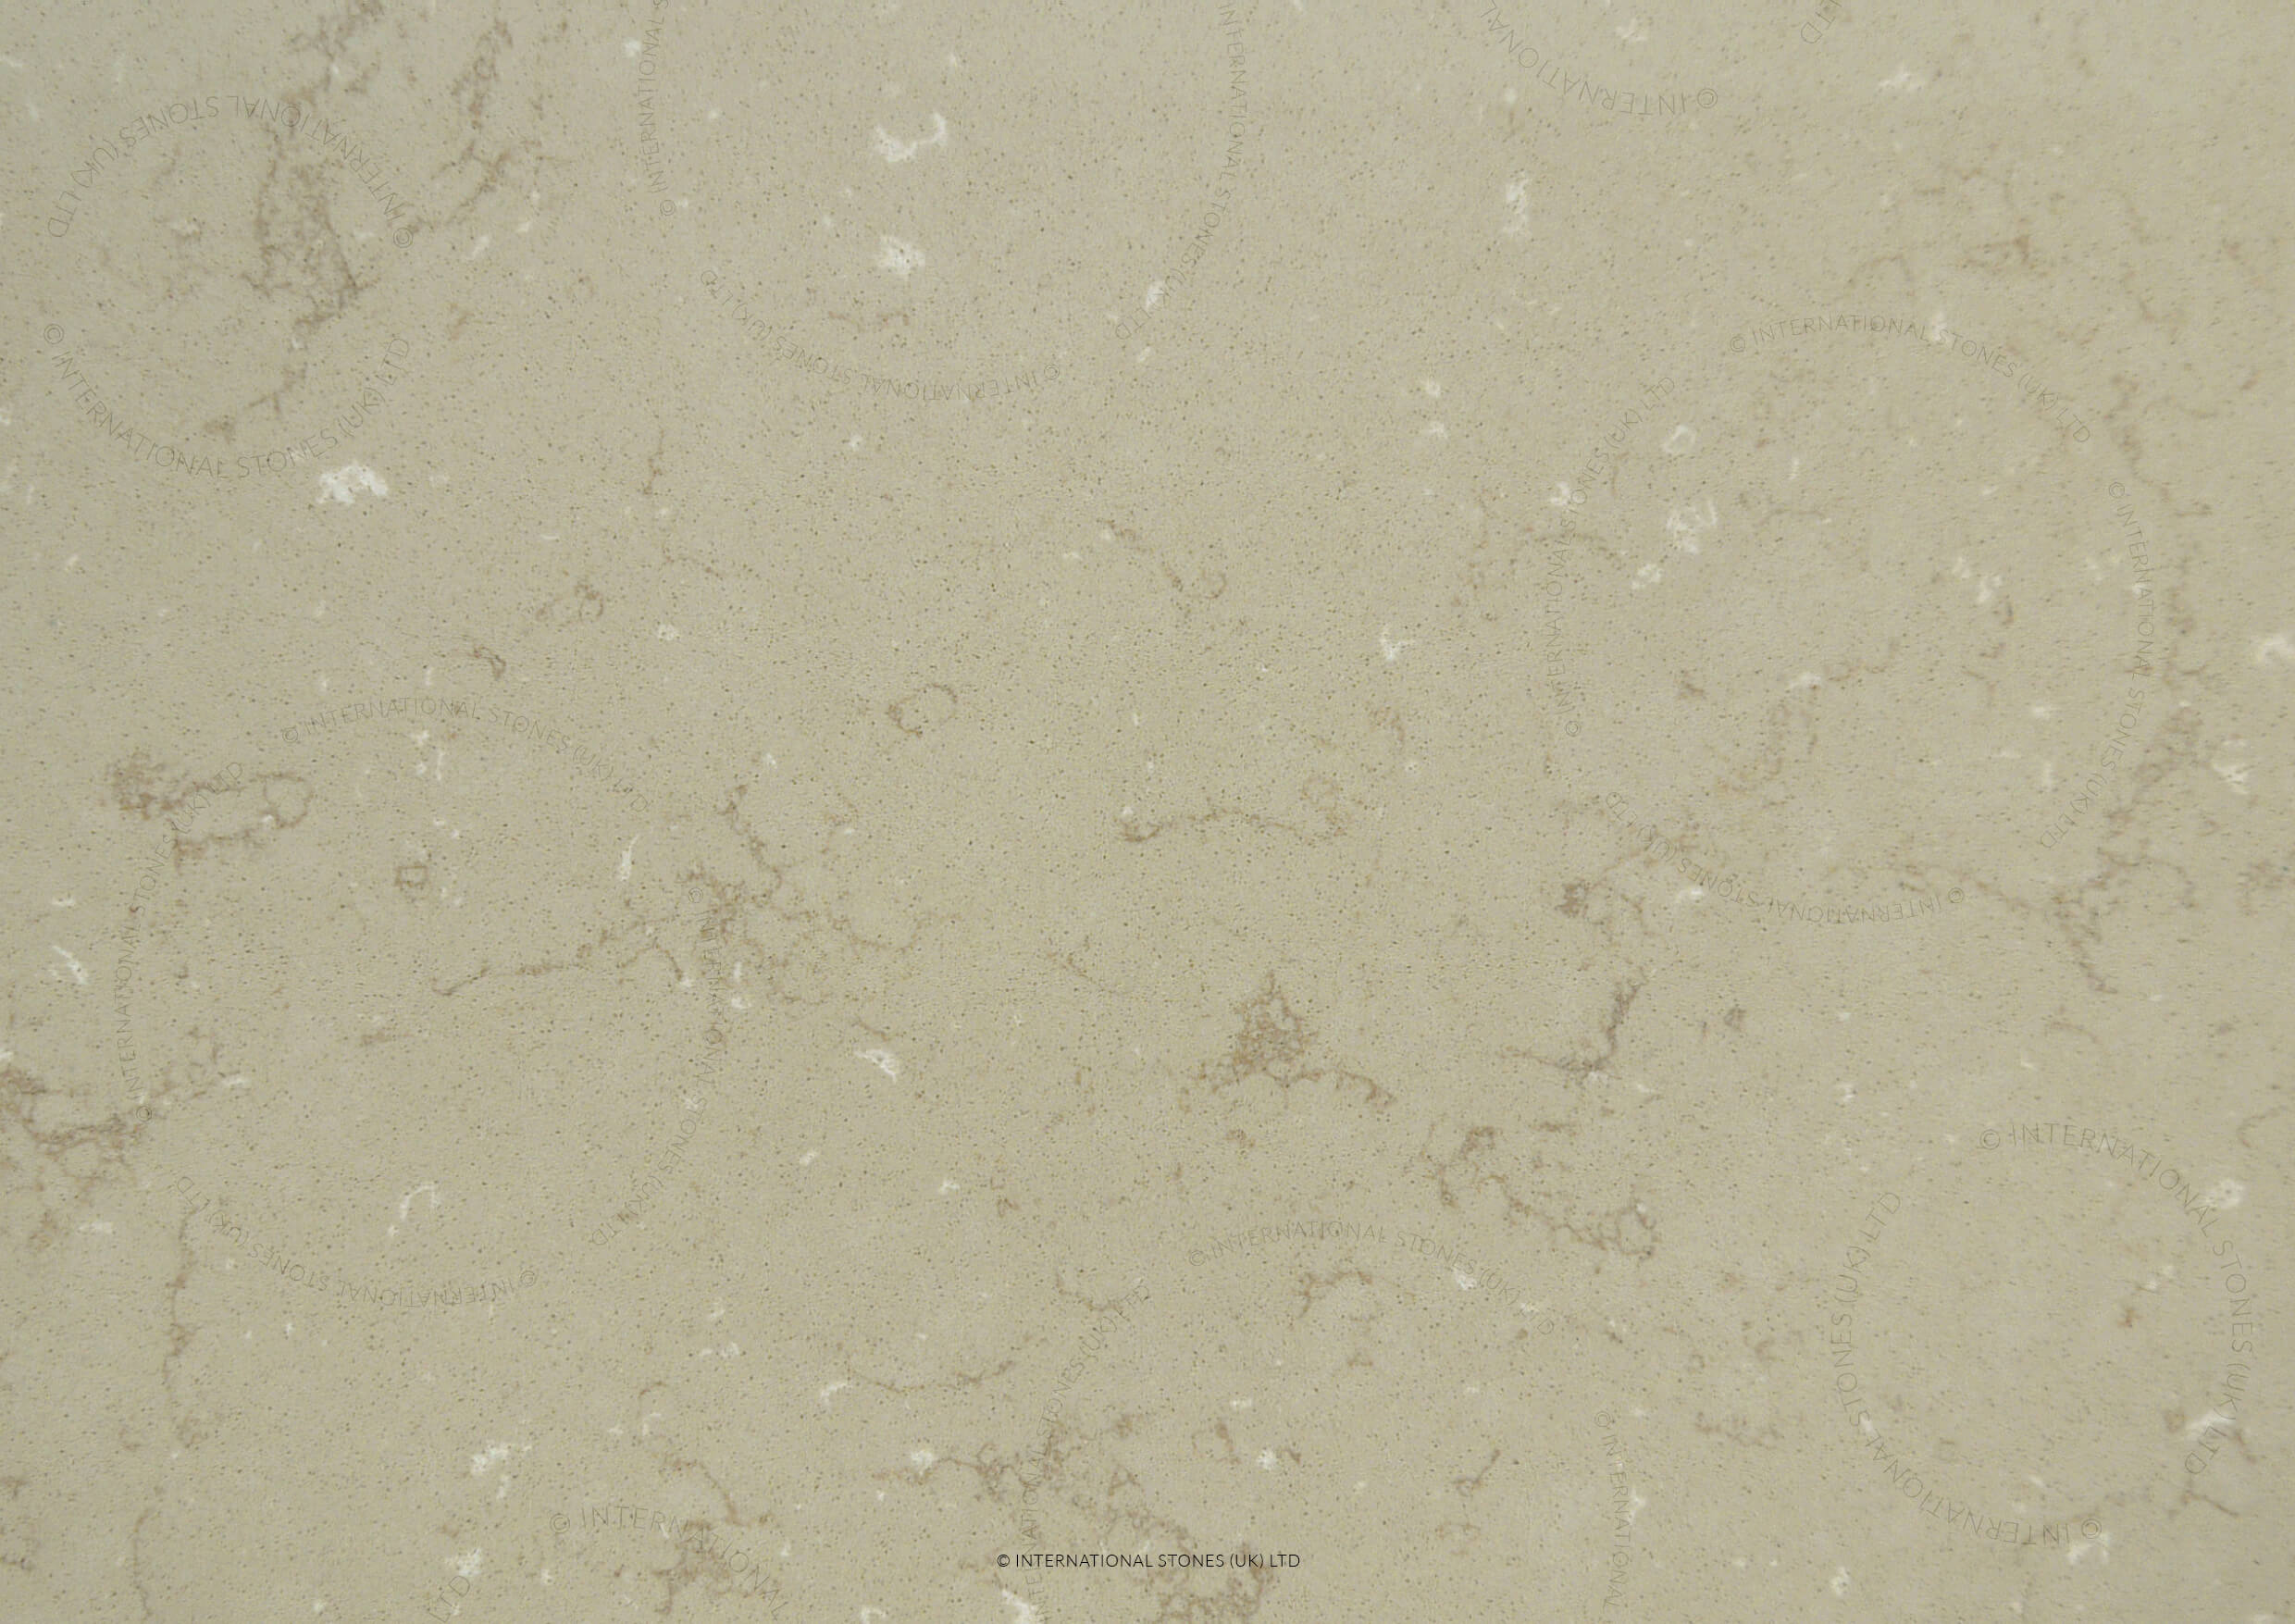 International Stone IQ Limestone - Basildon - Hadleigh